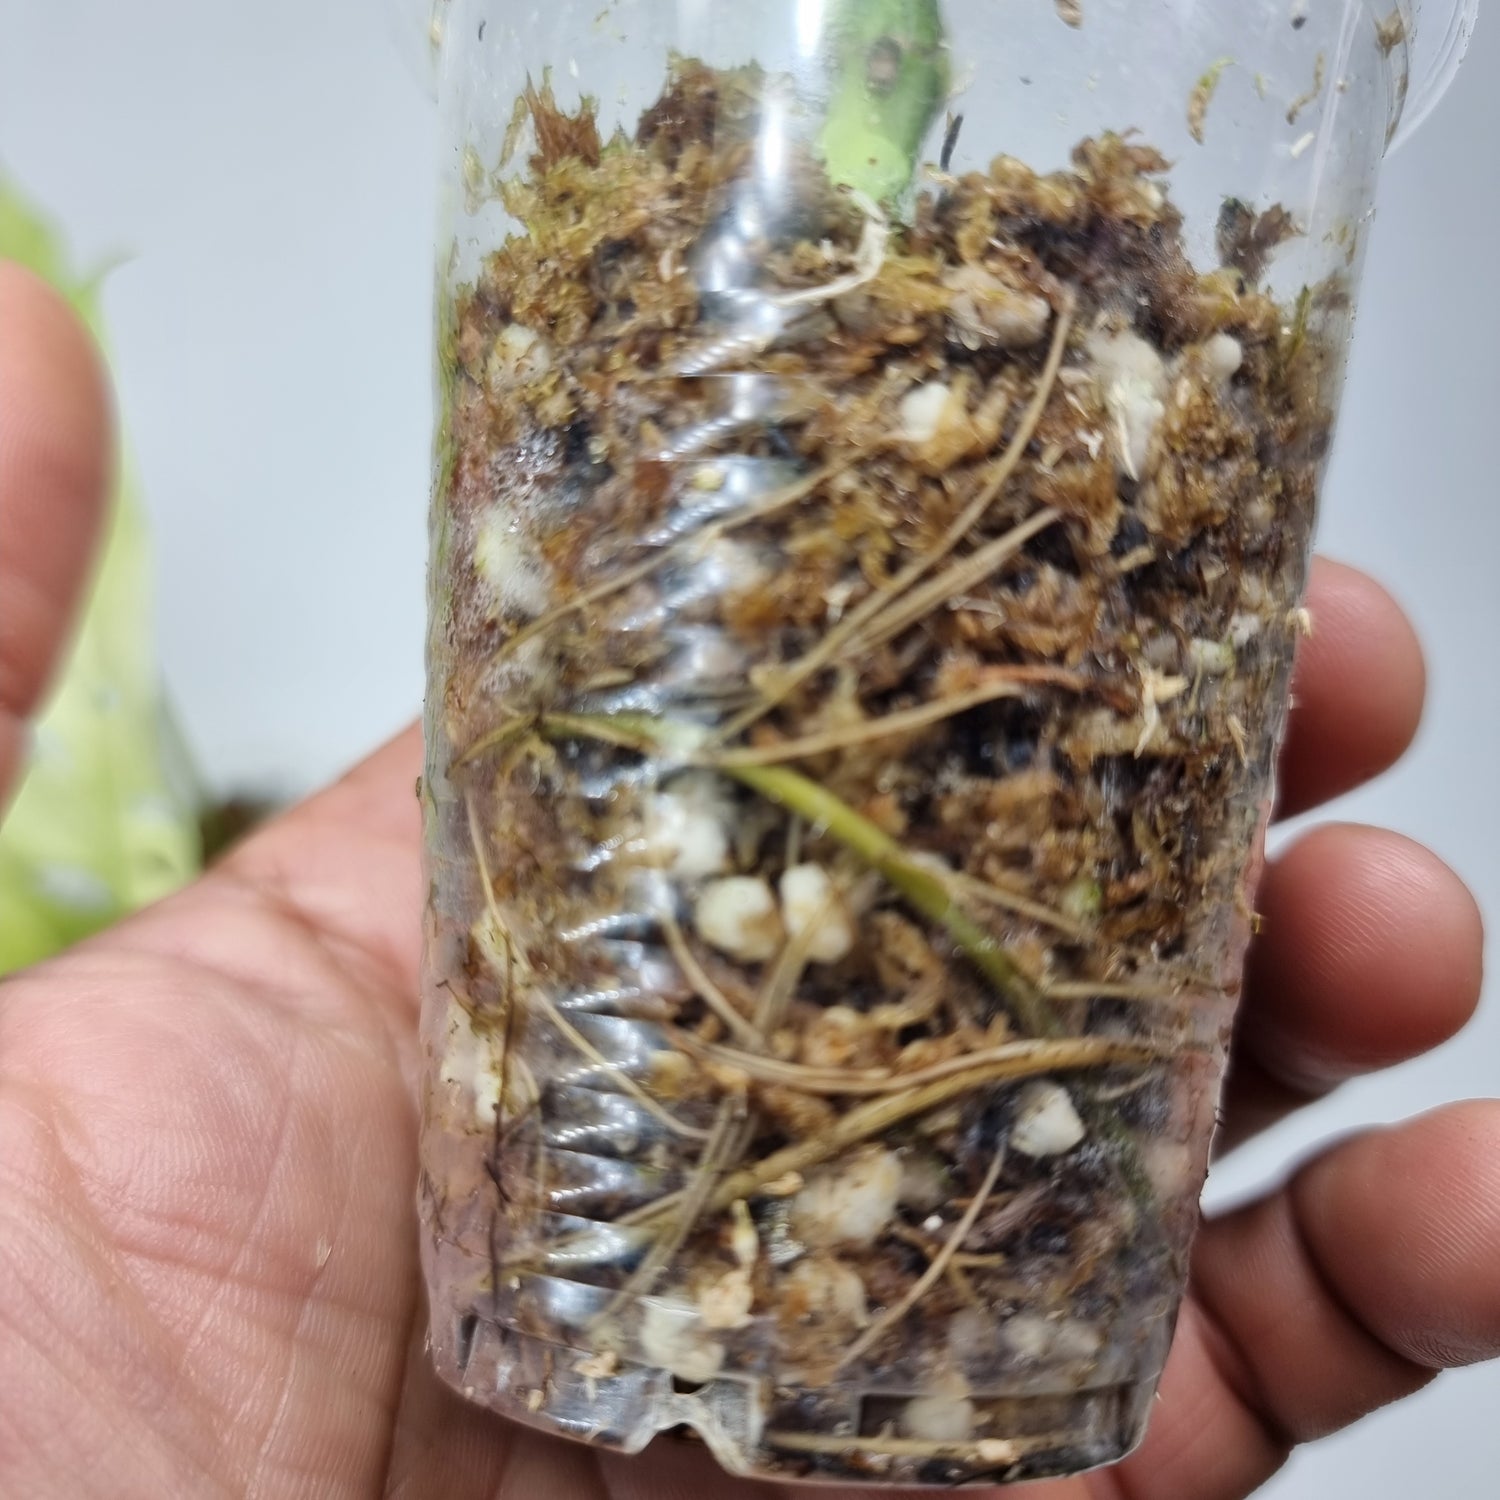 rare Monstera adansonii ssp laniata variegated for sale in Perth Australia